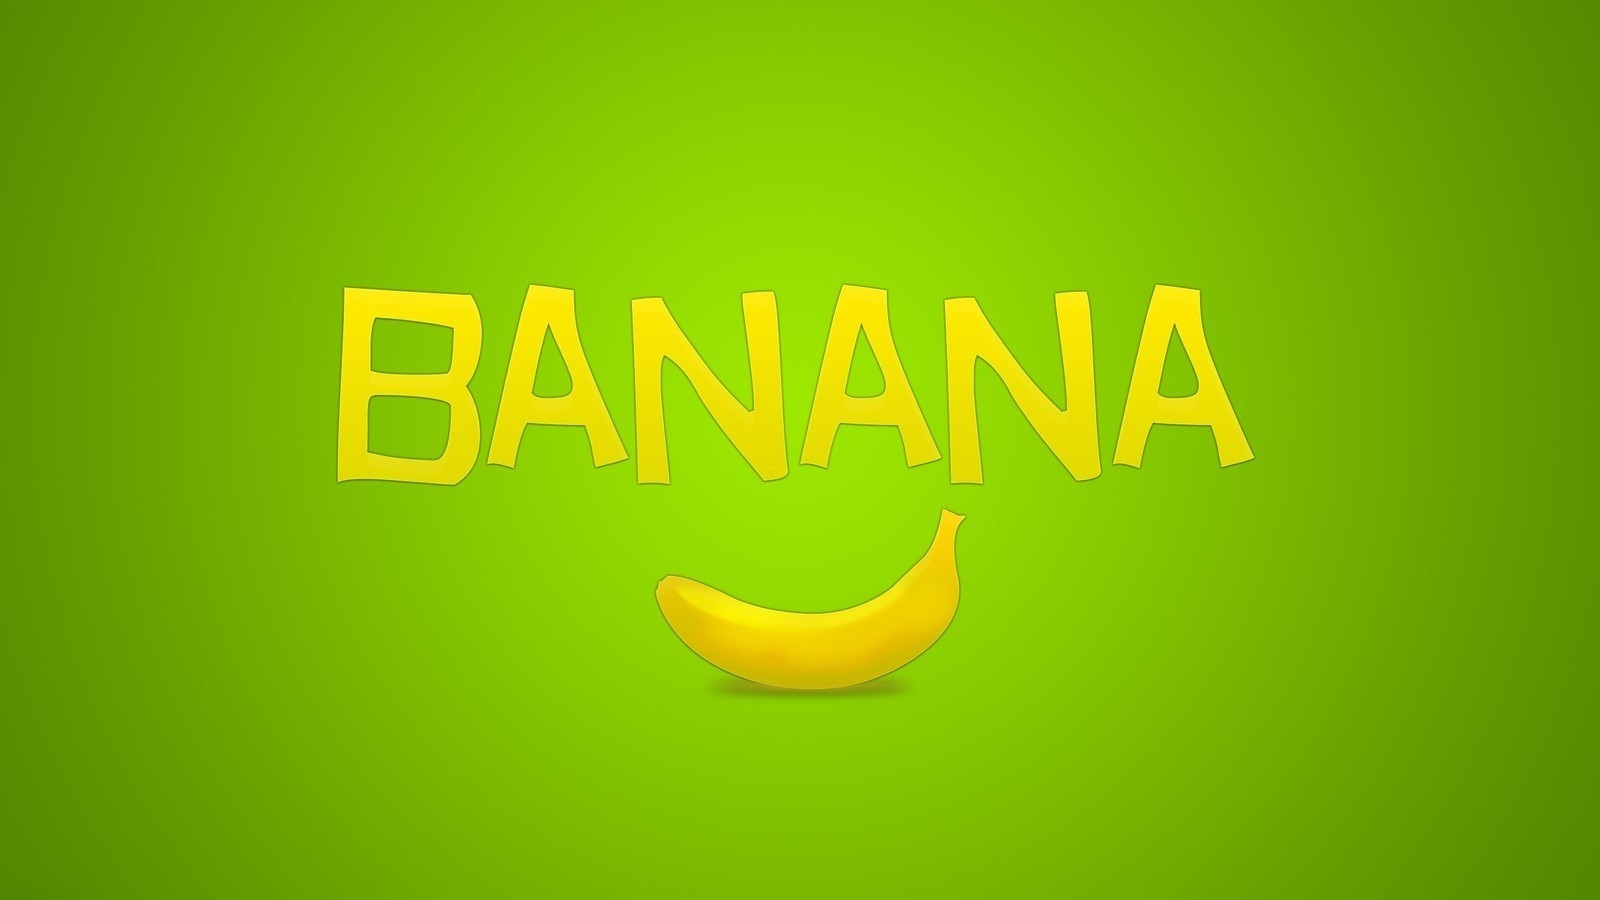 General 1600x900 minimalism digital art green bananas food fruit green background simple background typography